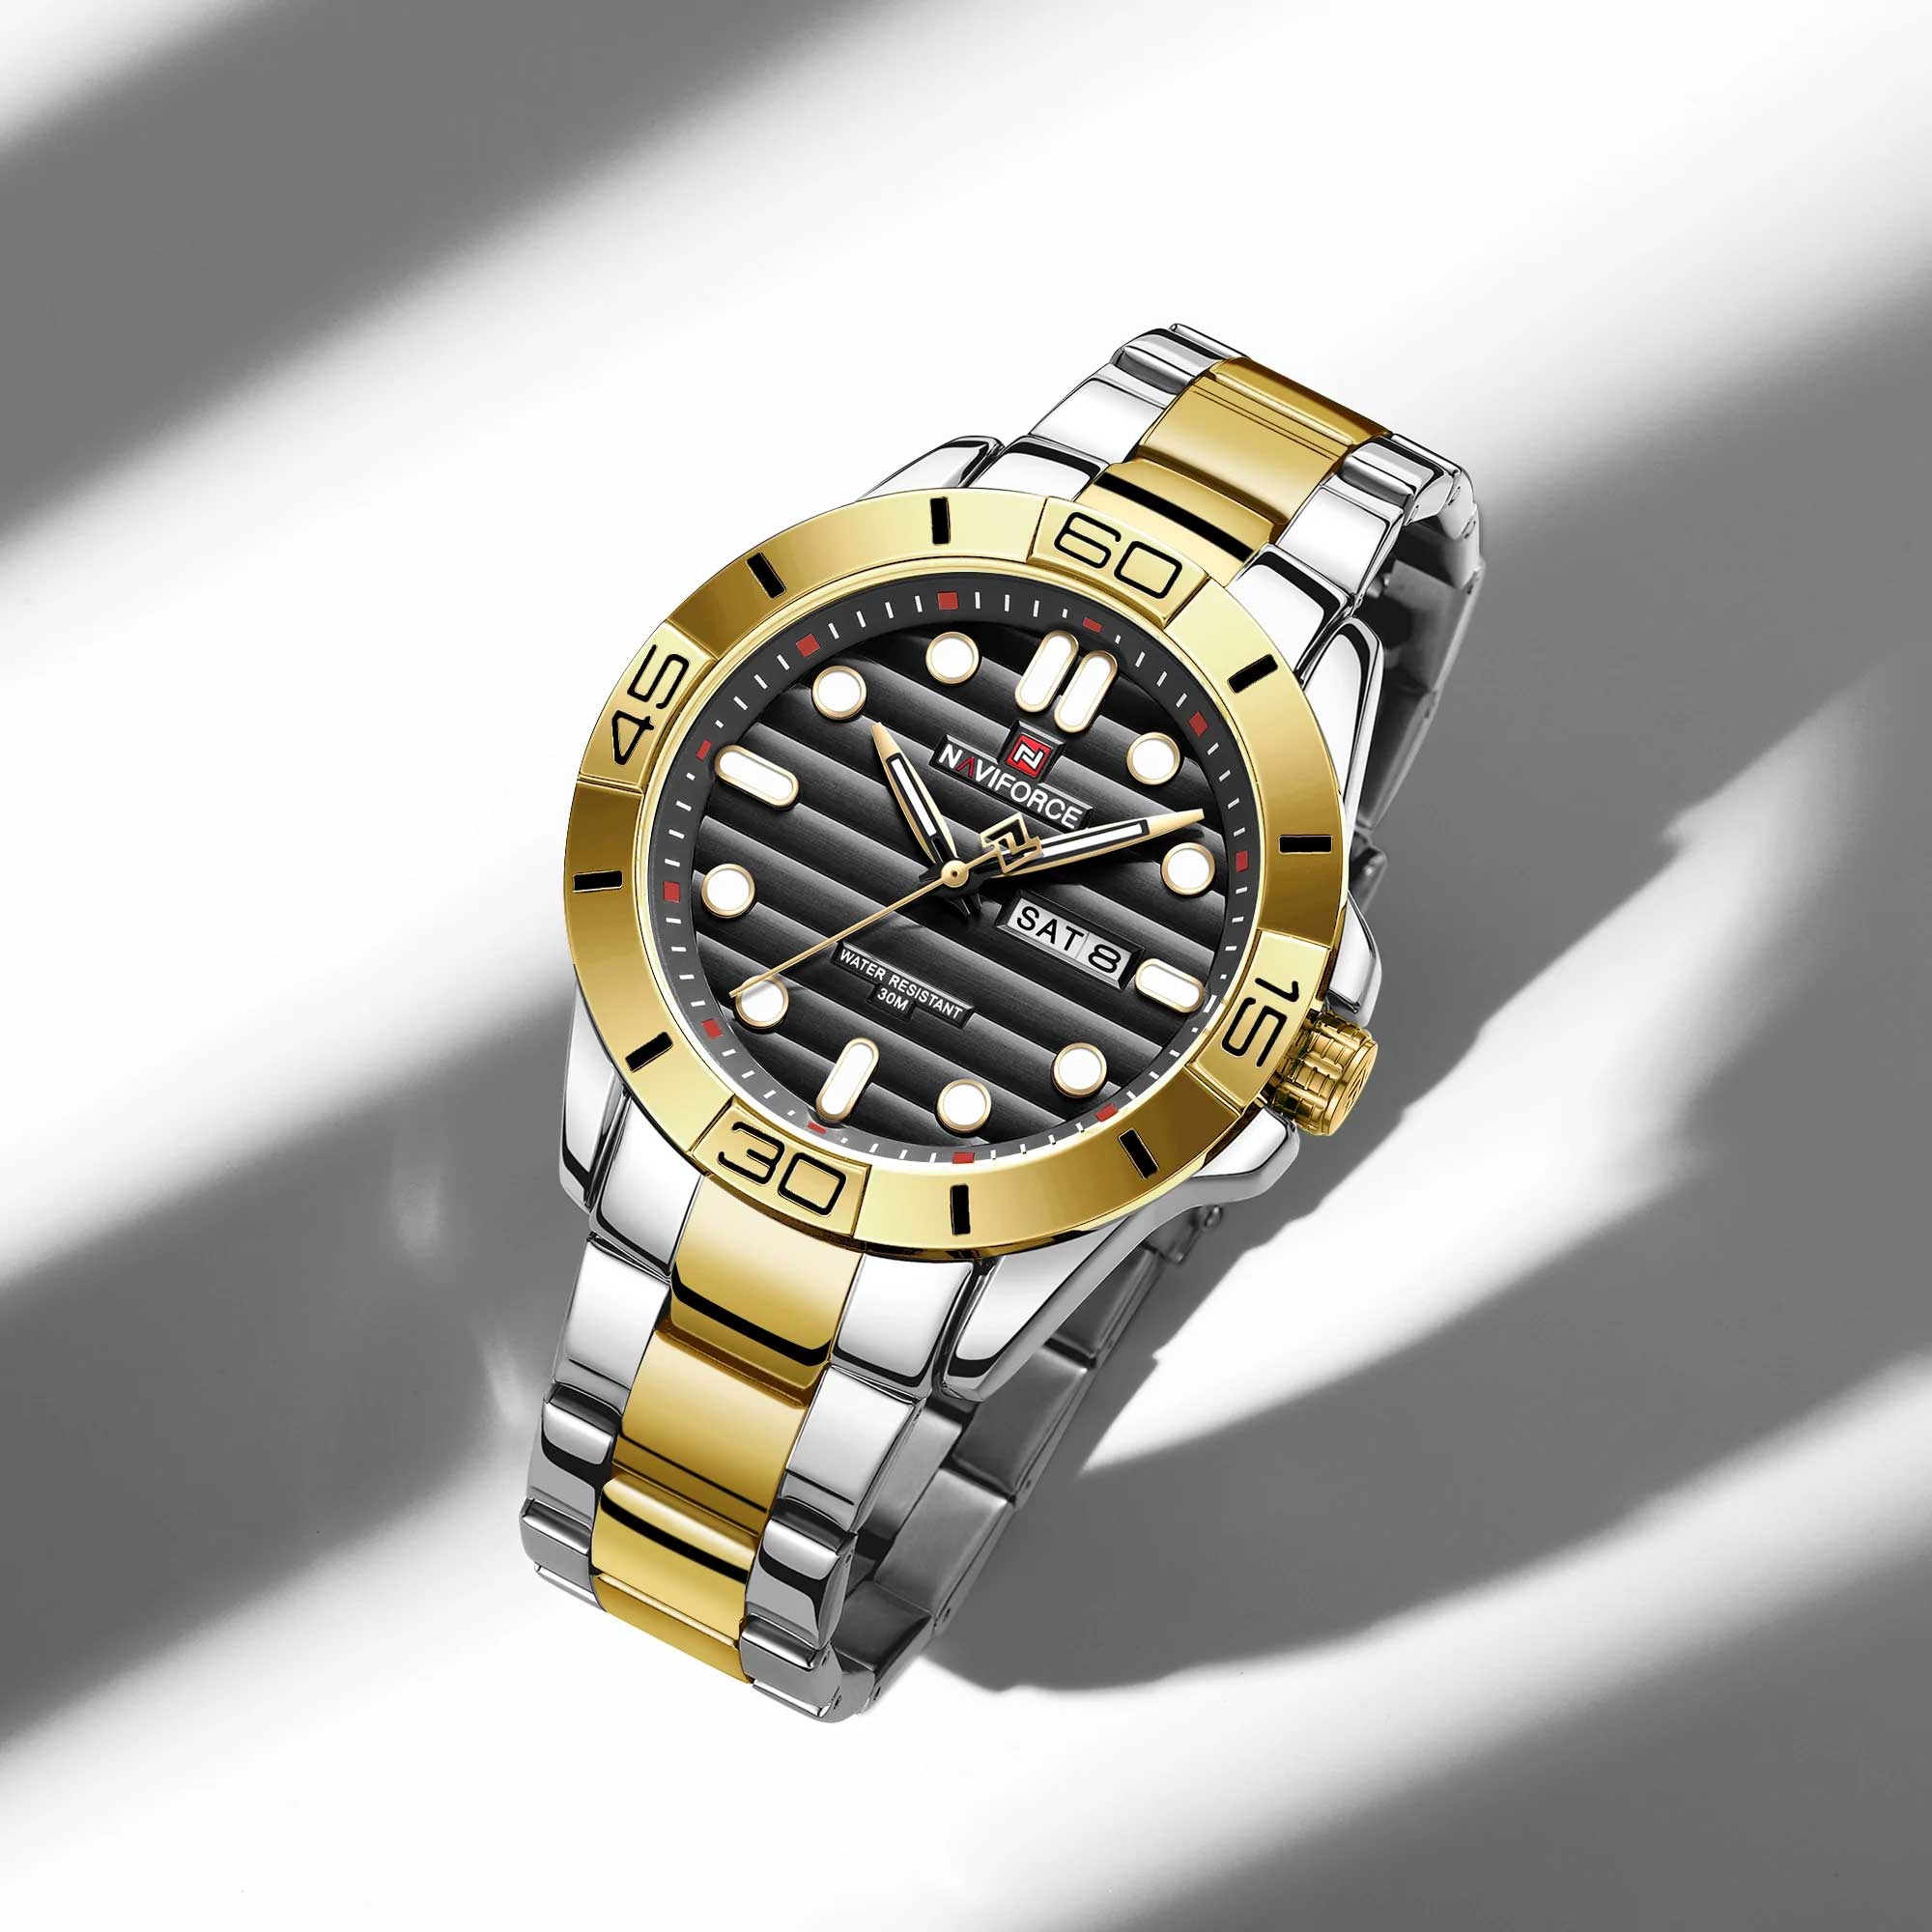 NaviForce-9198 stylish fashion wrist watch for men's casual wrear